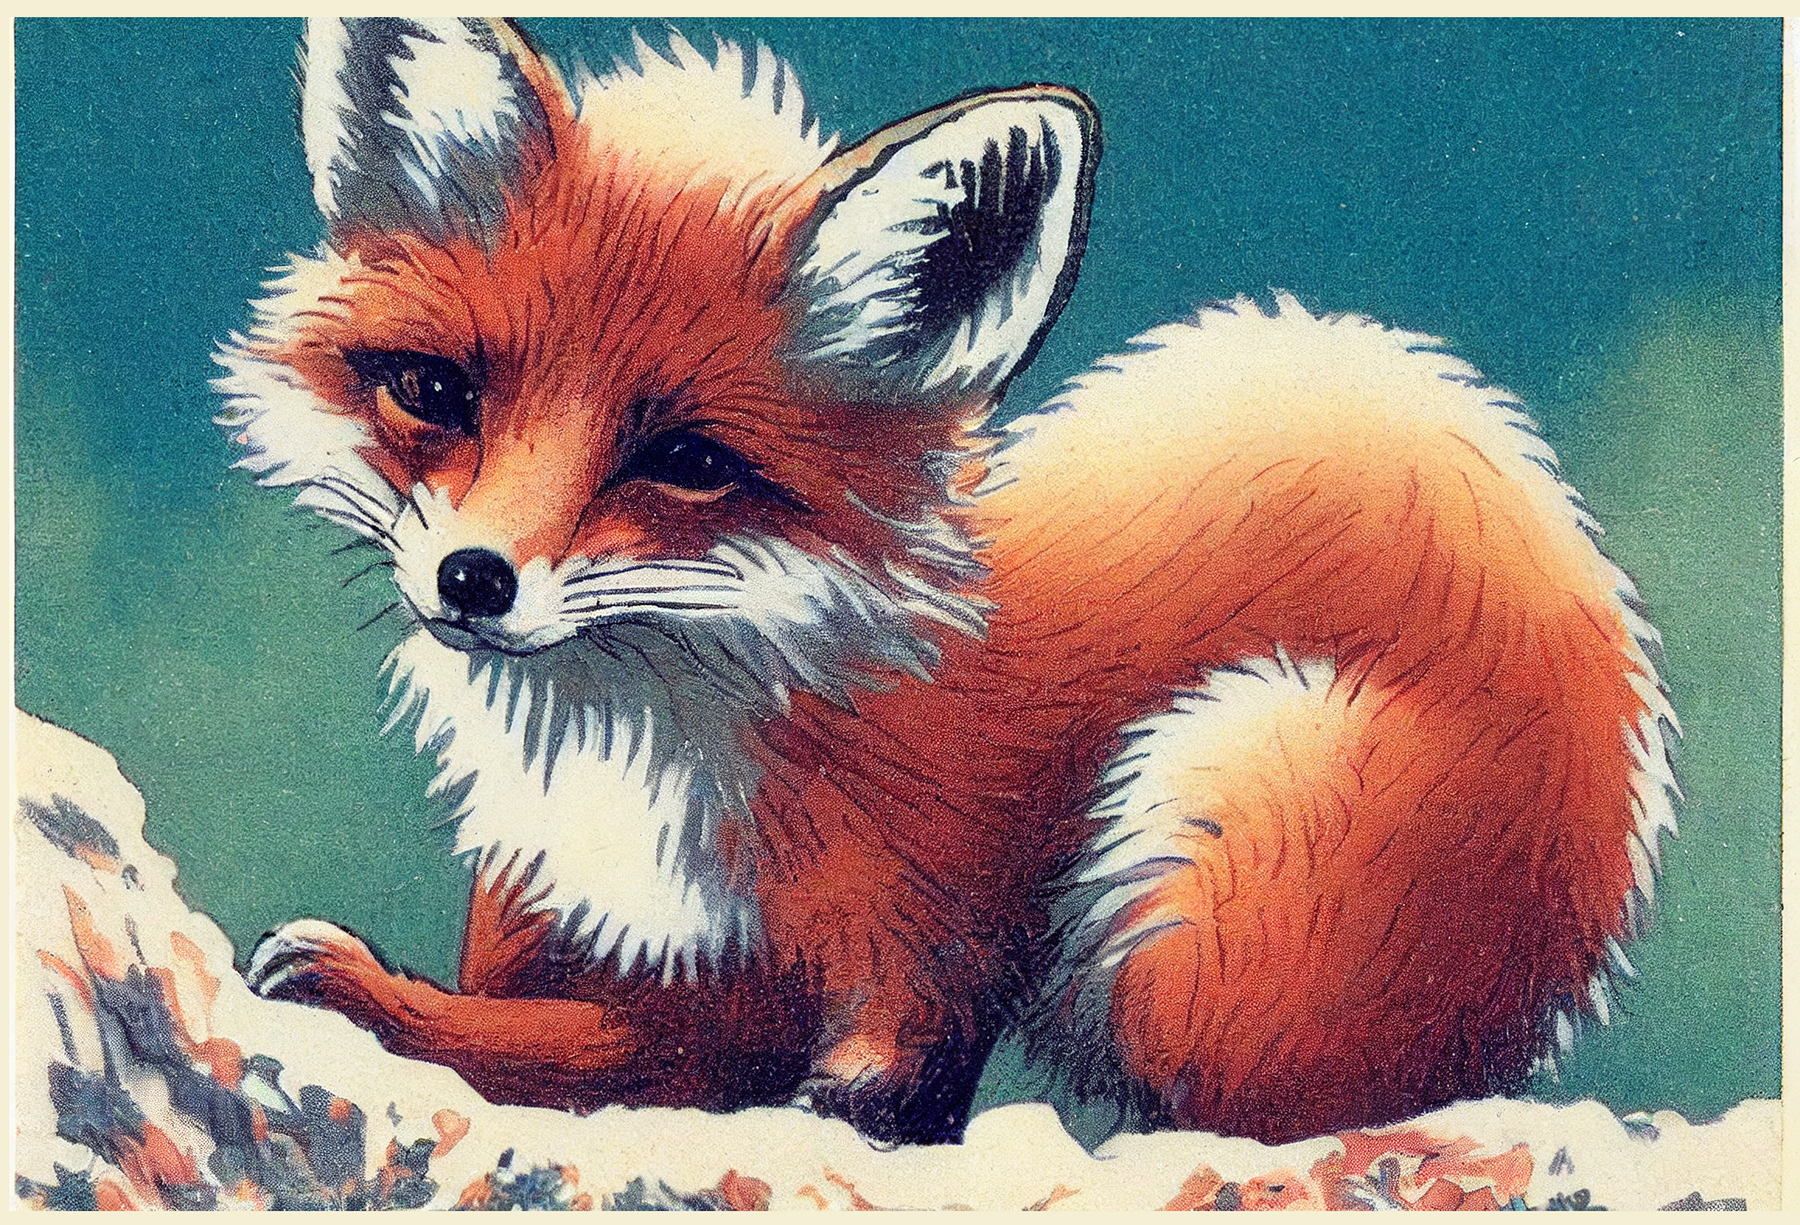 Cute Fox Drawing Wallpapers